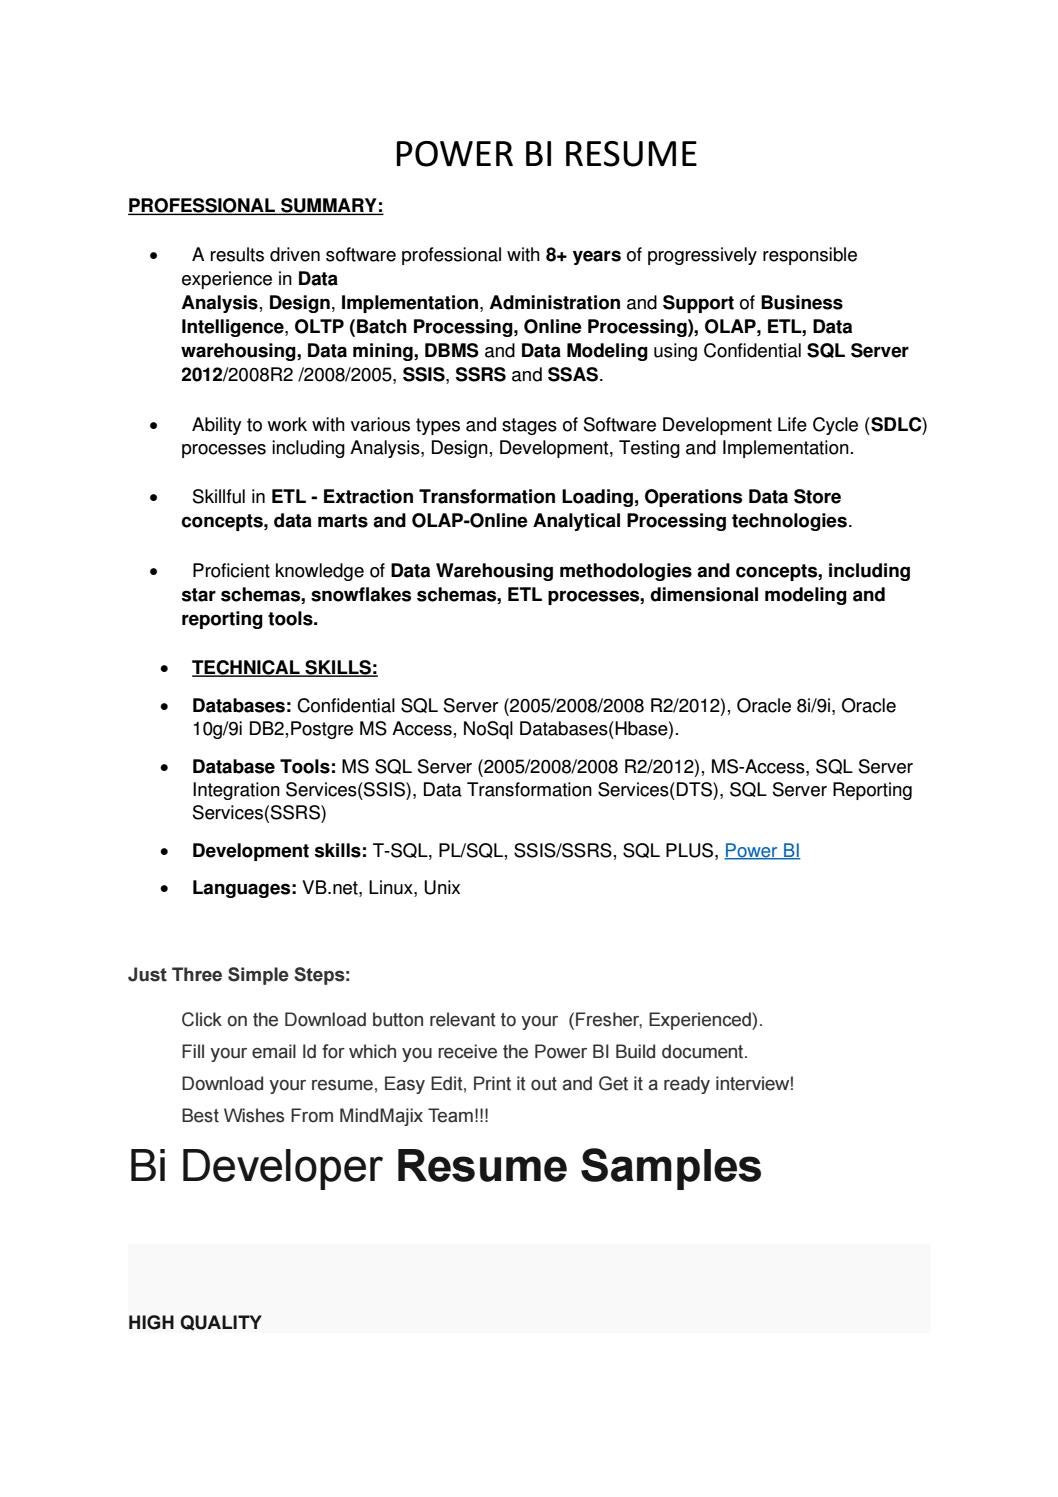 Sample Resume Database Sql Server Students Power Bi Resume by Lillydass12 – issuu